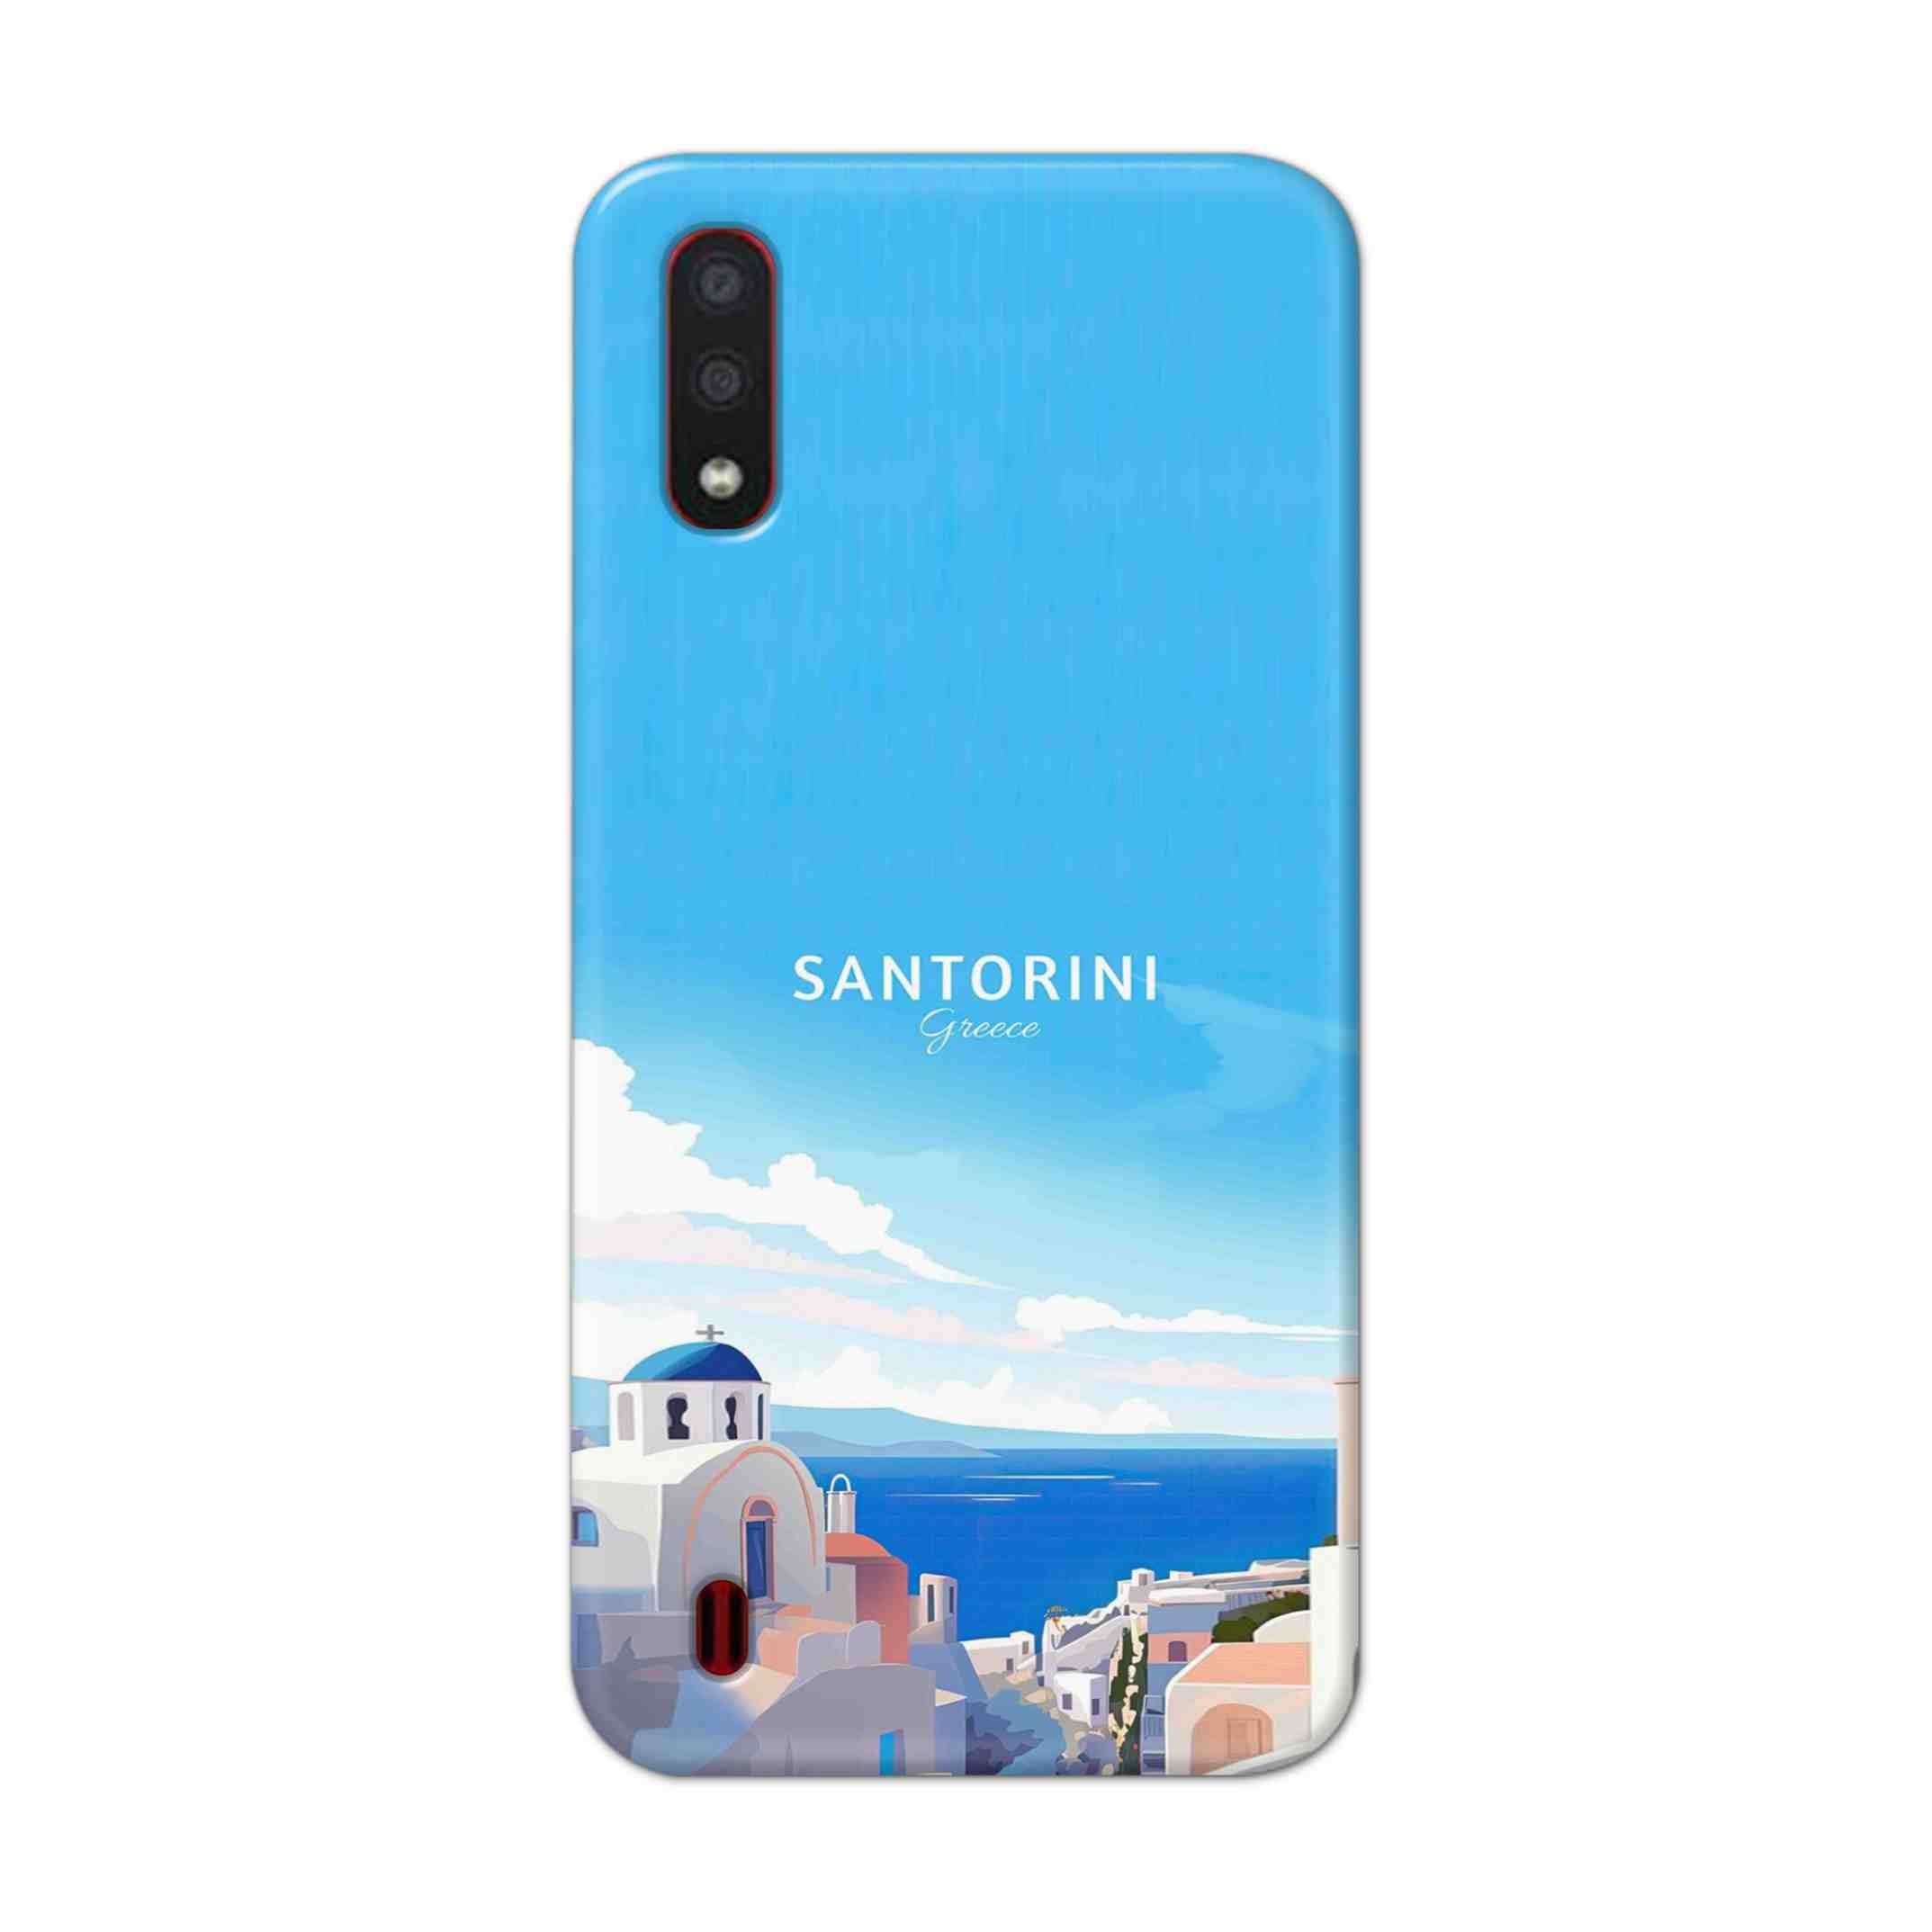 Buy Santorini Hard Back Mobile Phone Case/Cover For Samsung Galaxy M01 Online